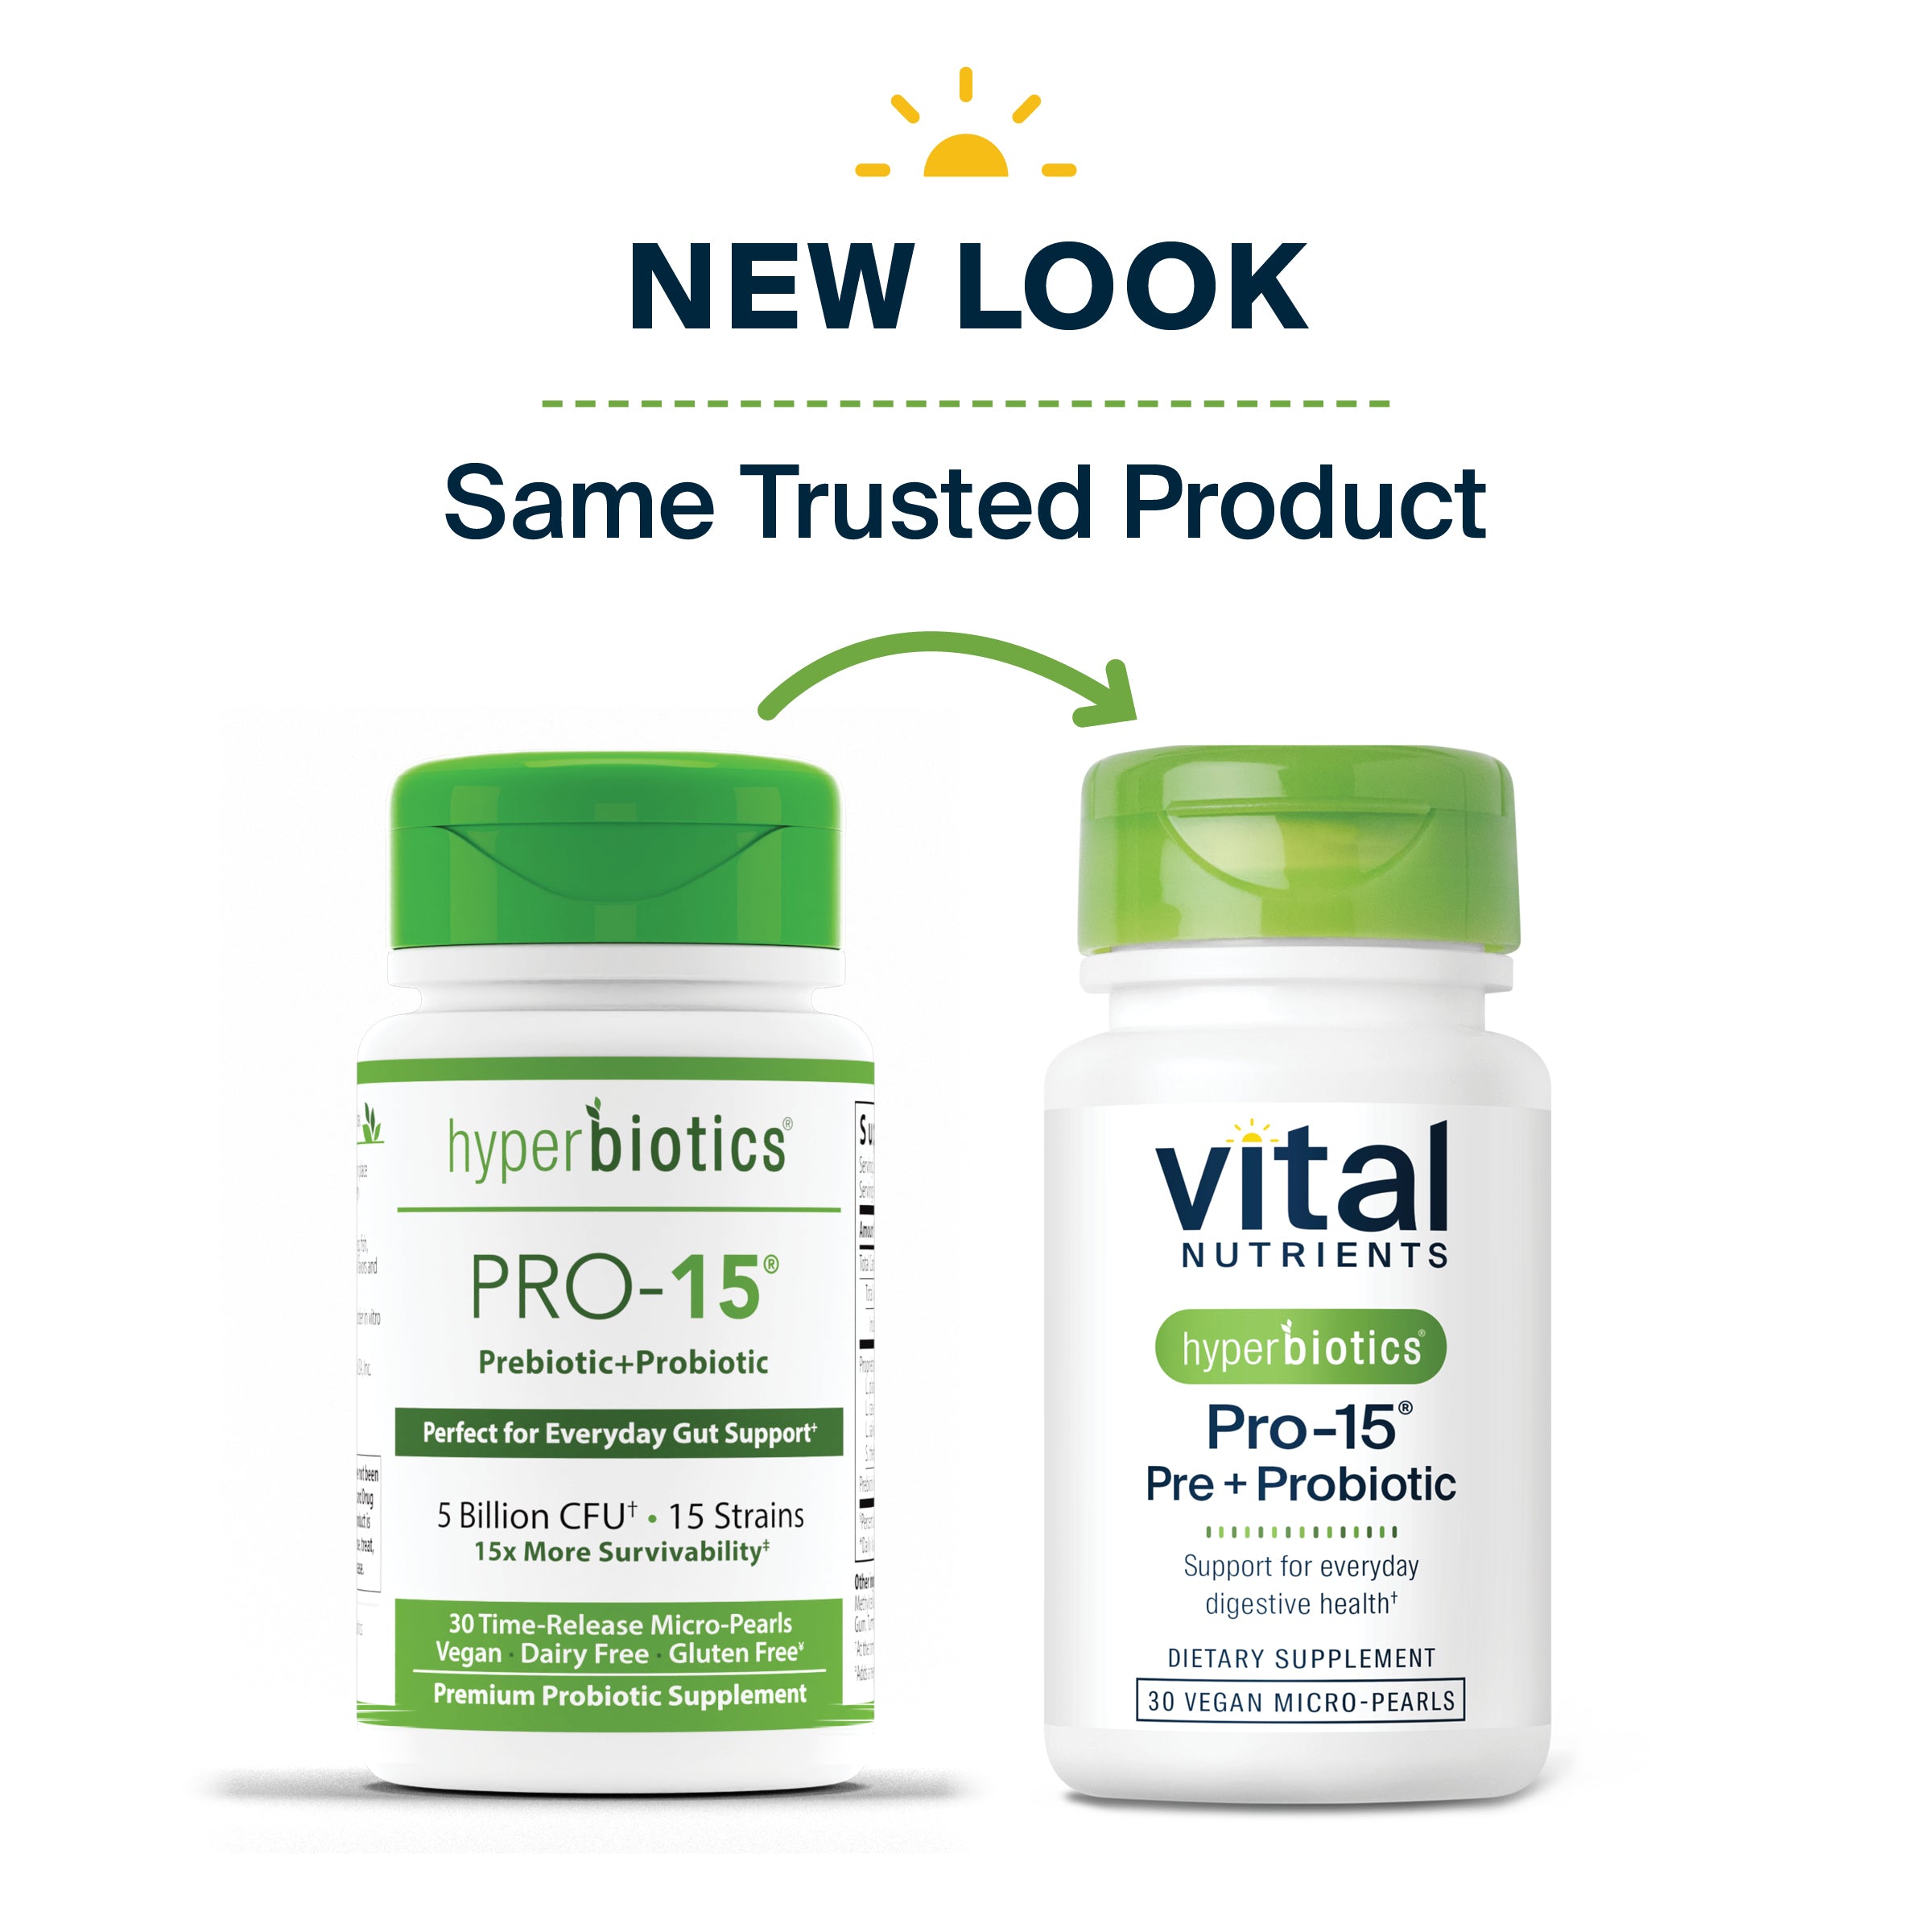 Hyperbiotics Pro-15 Pre+Probiotic 30 vegan micro-pearls new look, same trusted product.